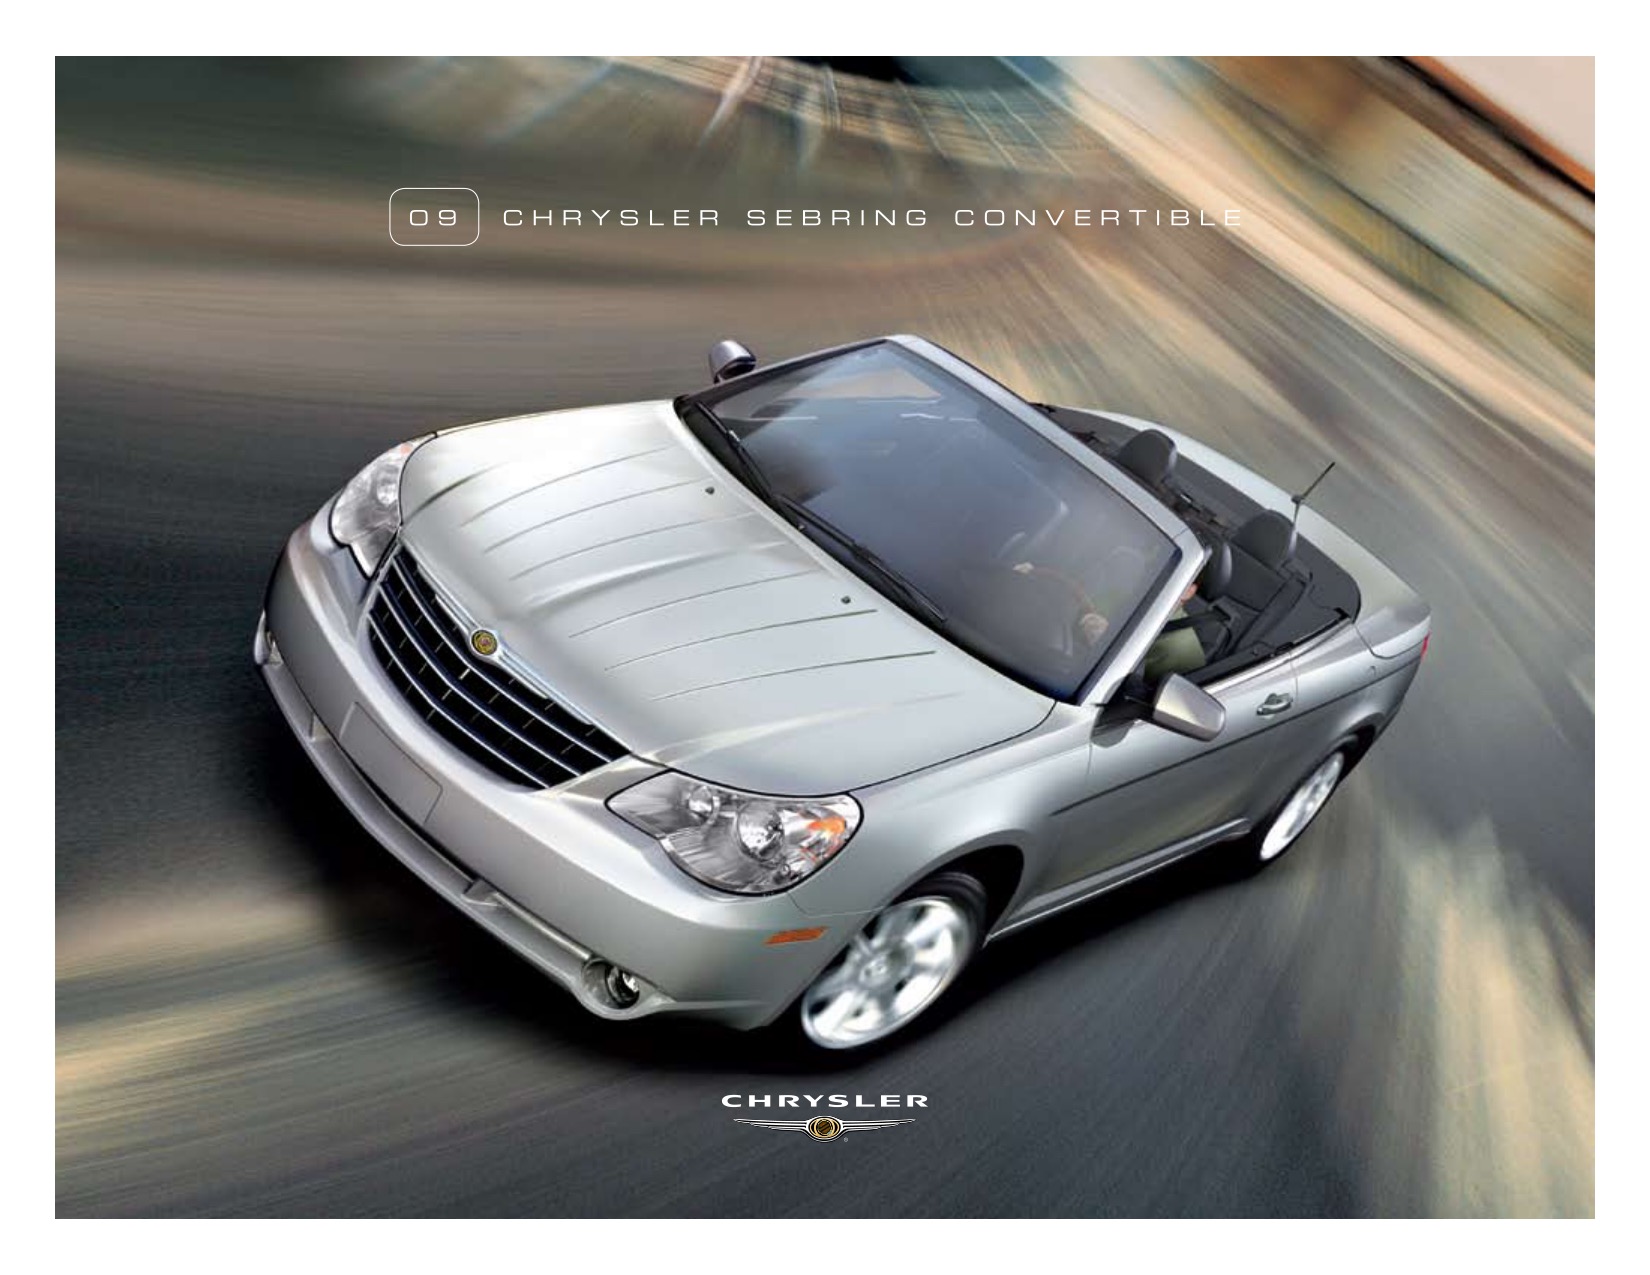 2009 Chrysler Sebring Convertible Brochure